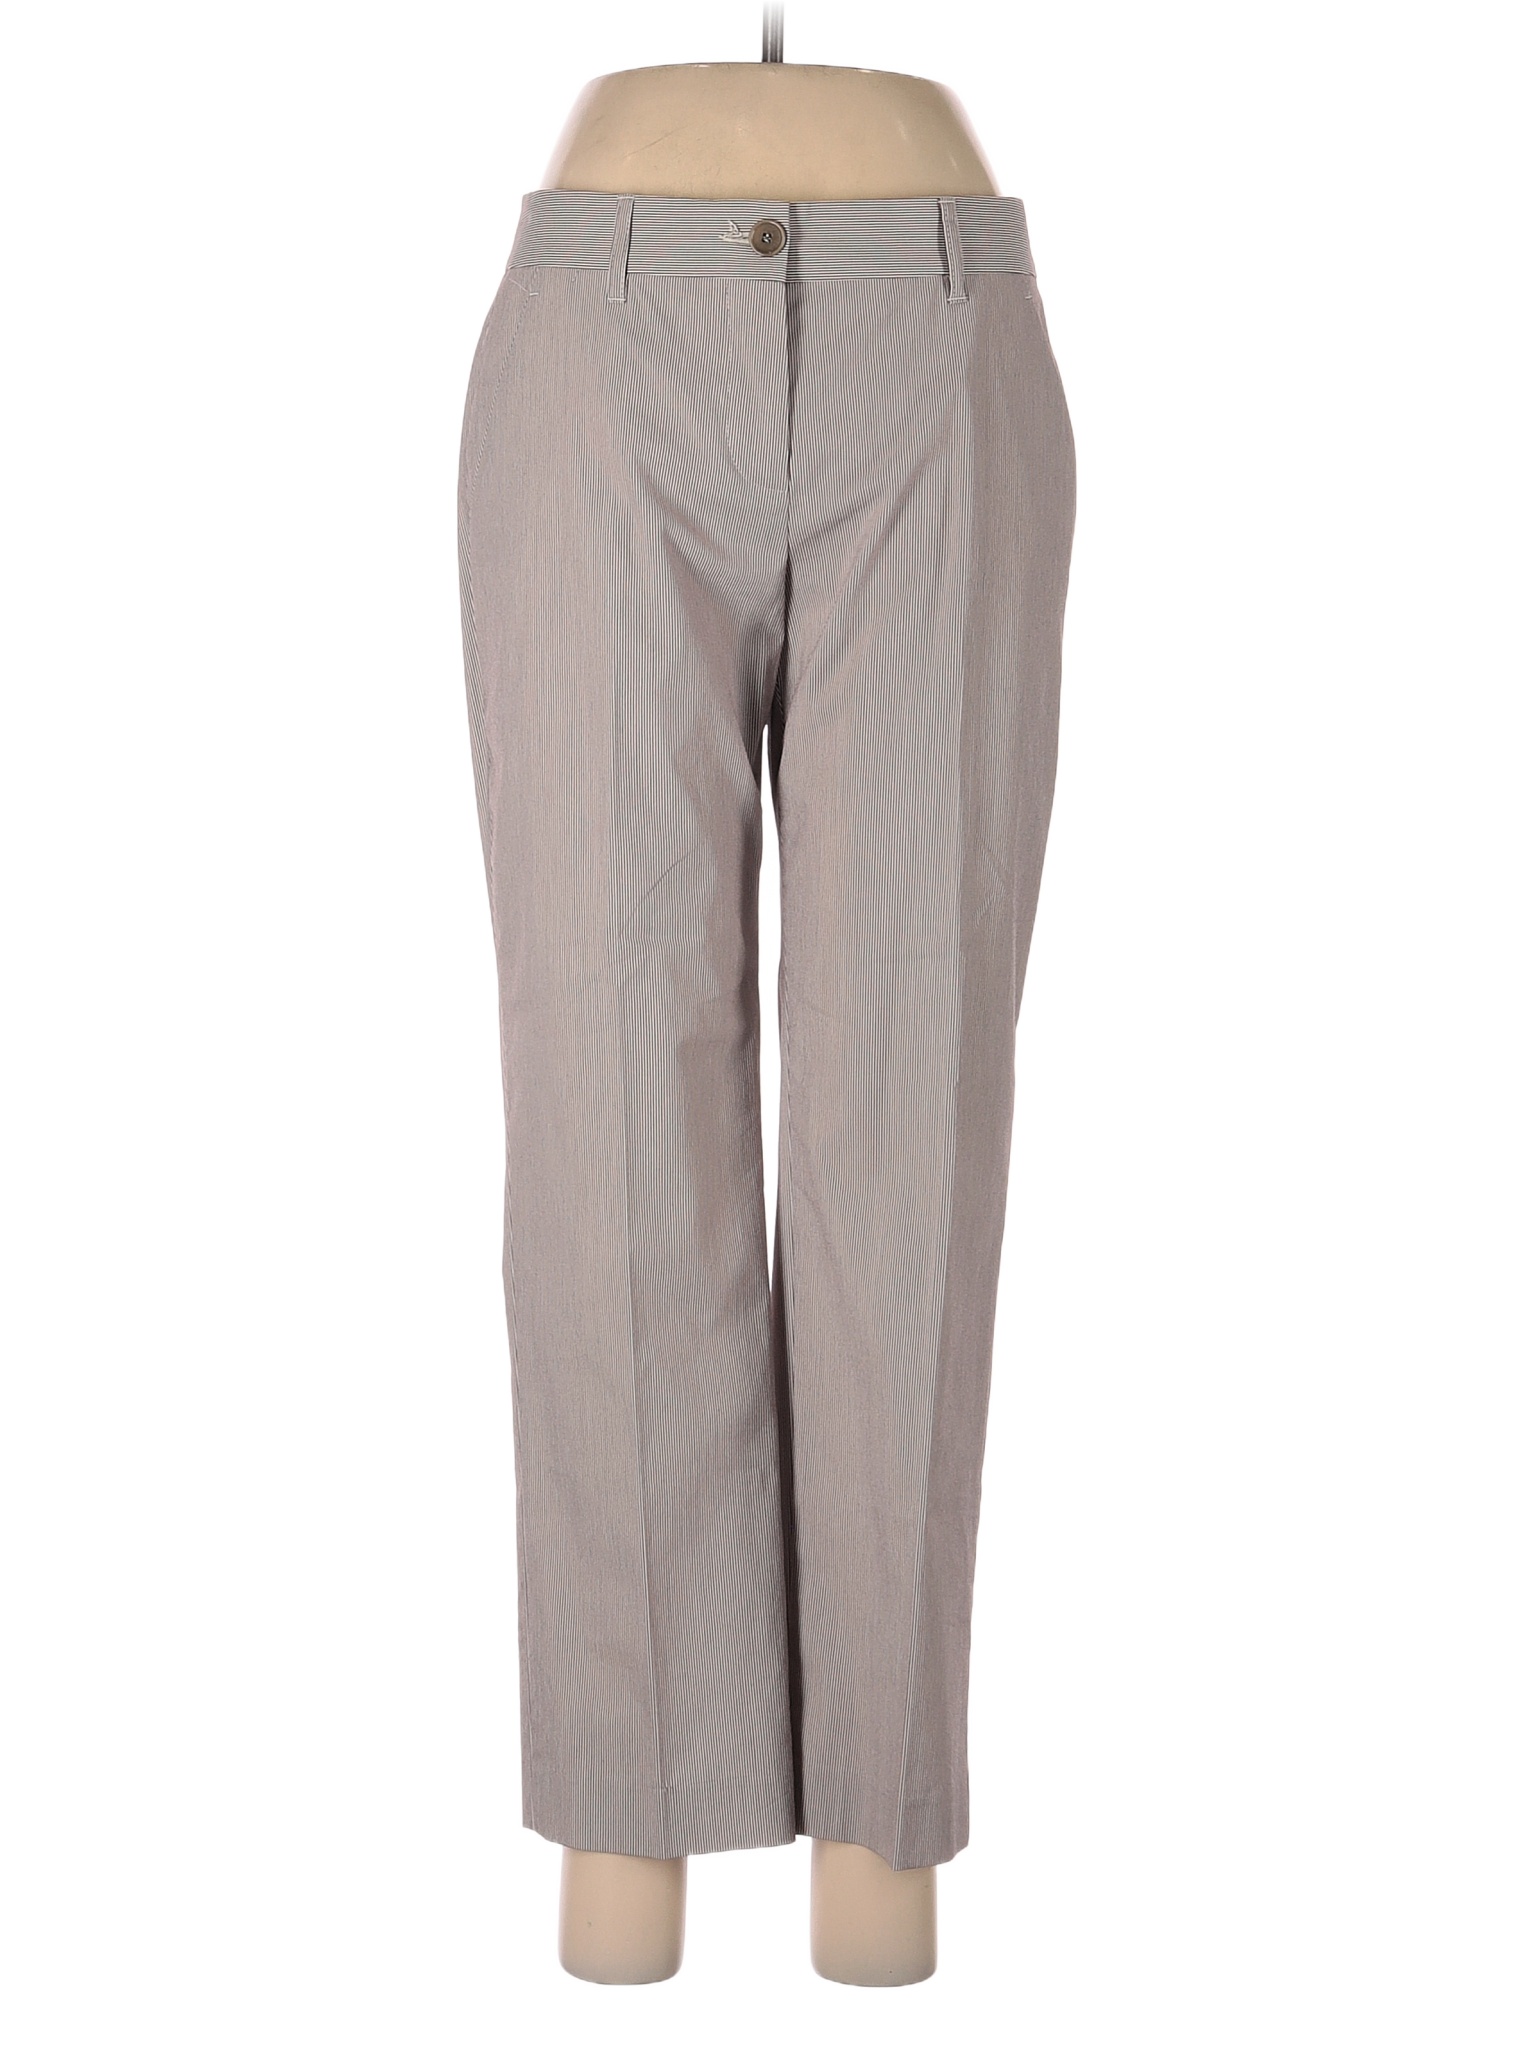 ETRO Stripes Gray Dress Pants Size 42 (IT) - 81% off | thredUP